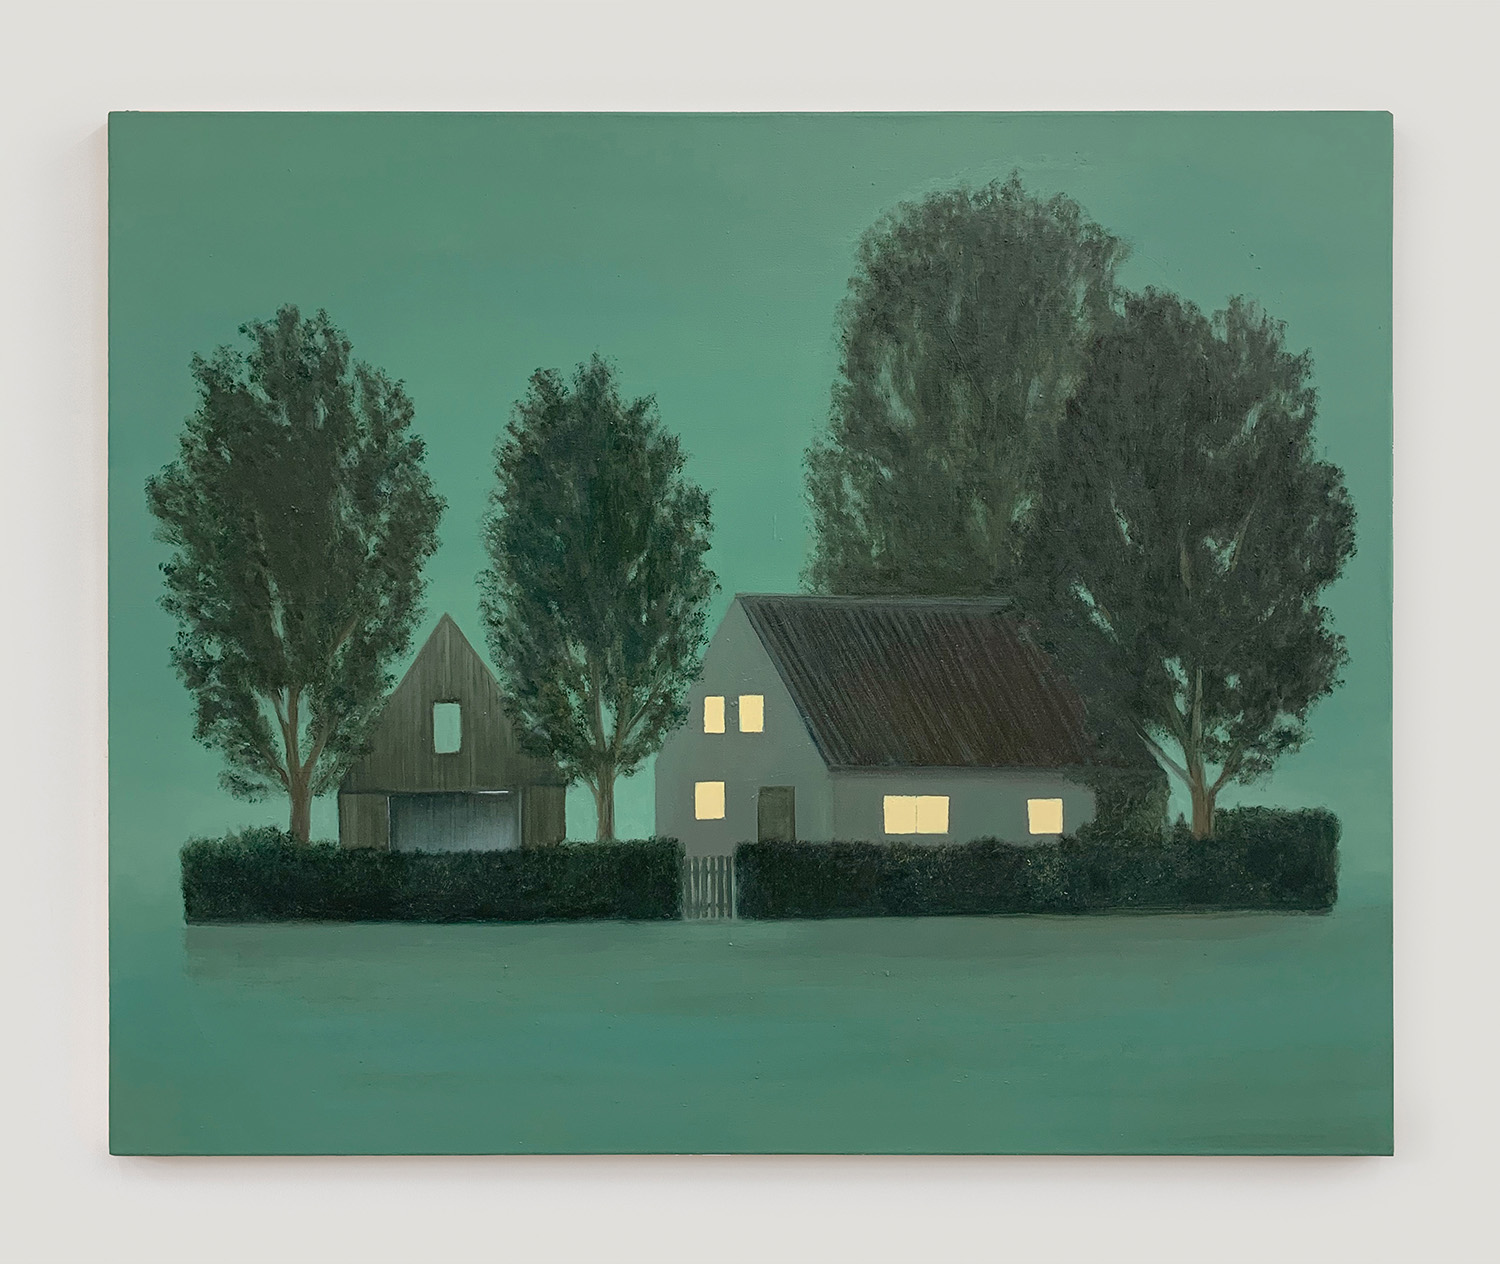 Simon Modersohn, Hinterland, 2022, oil on canvas, 90.5 x 110.5 cm, 35 5/8 x 43 1/2 in